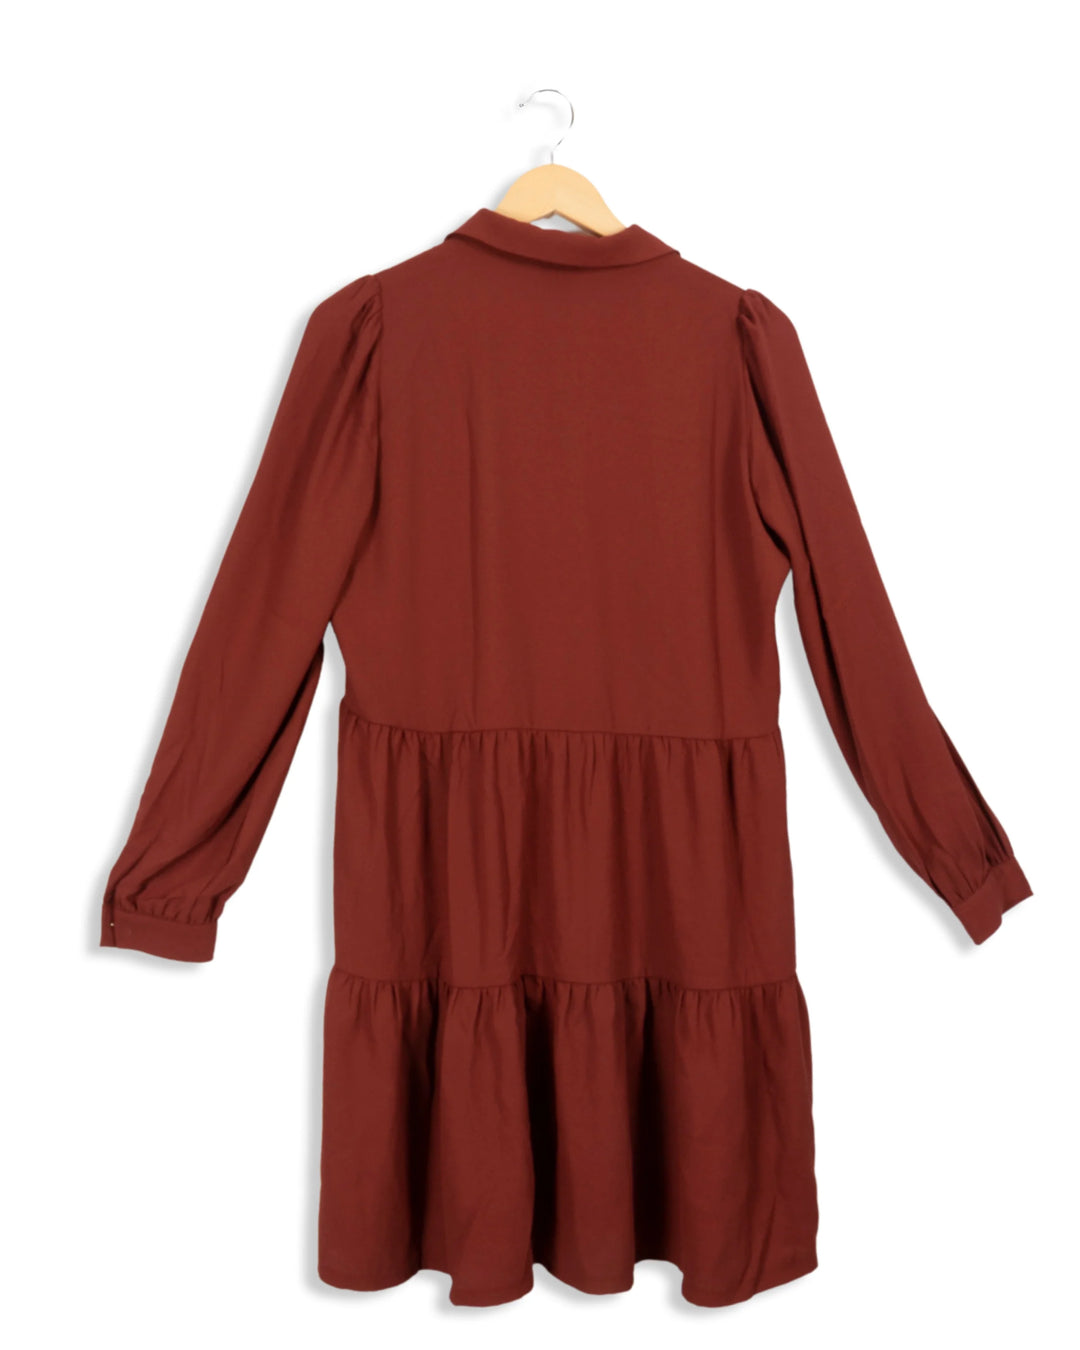 Short burgundy dress - S (verified by skupbm)